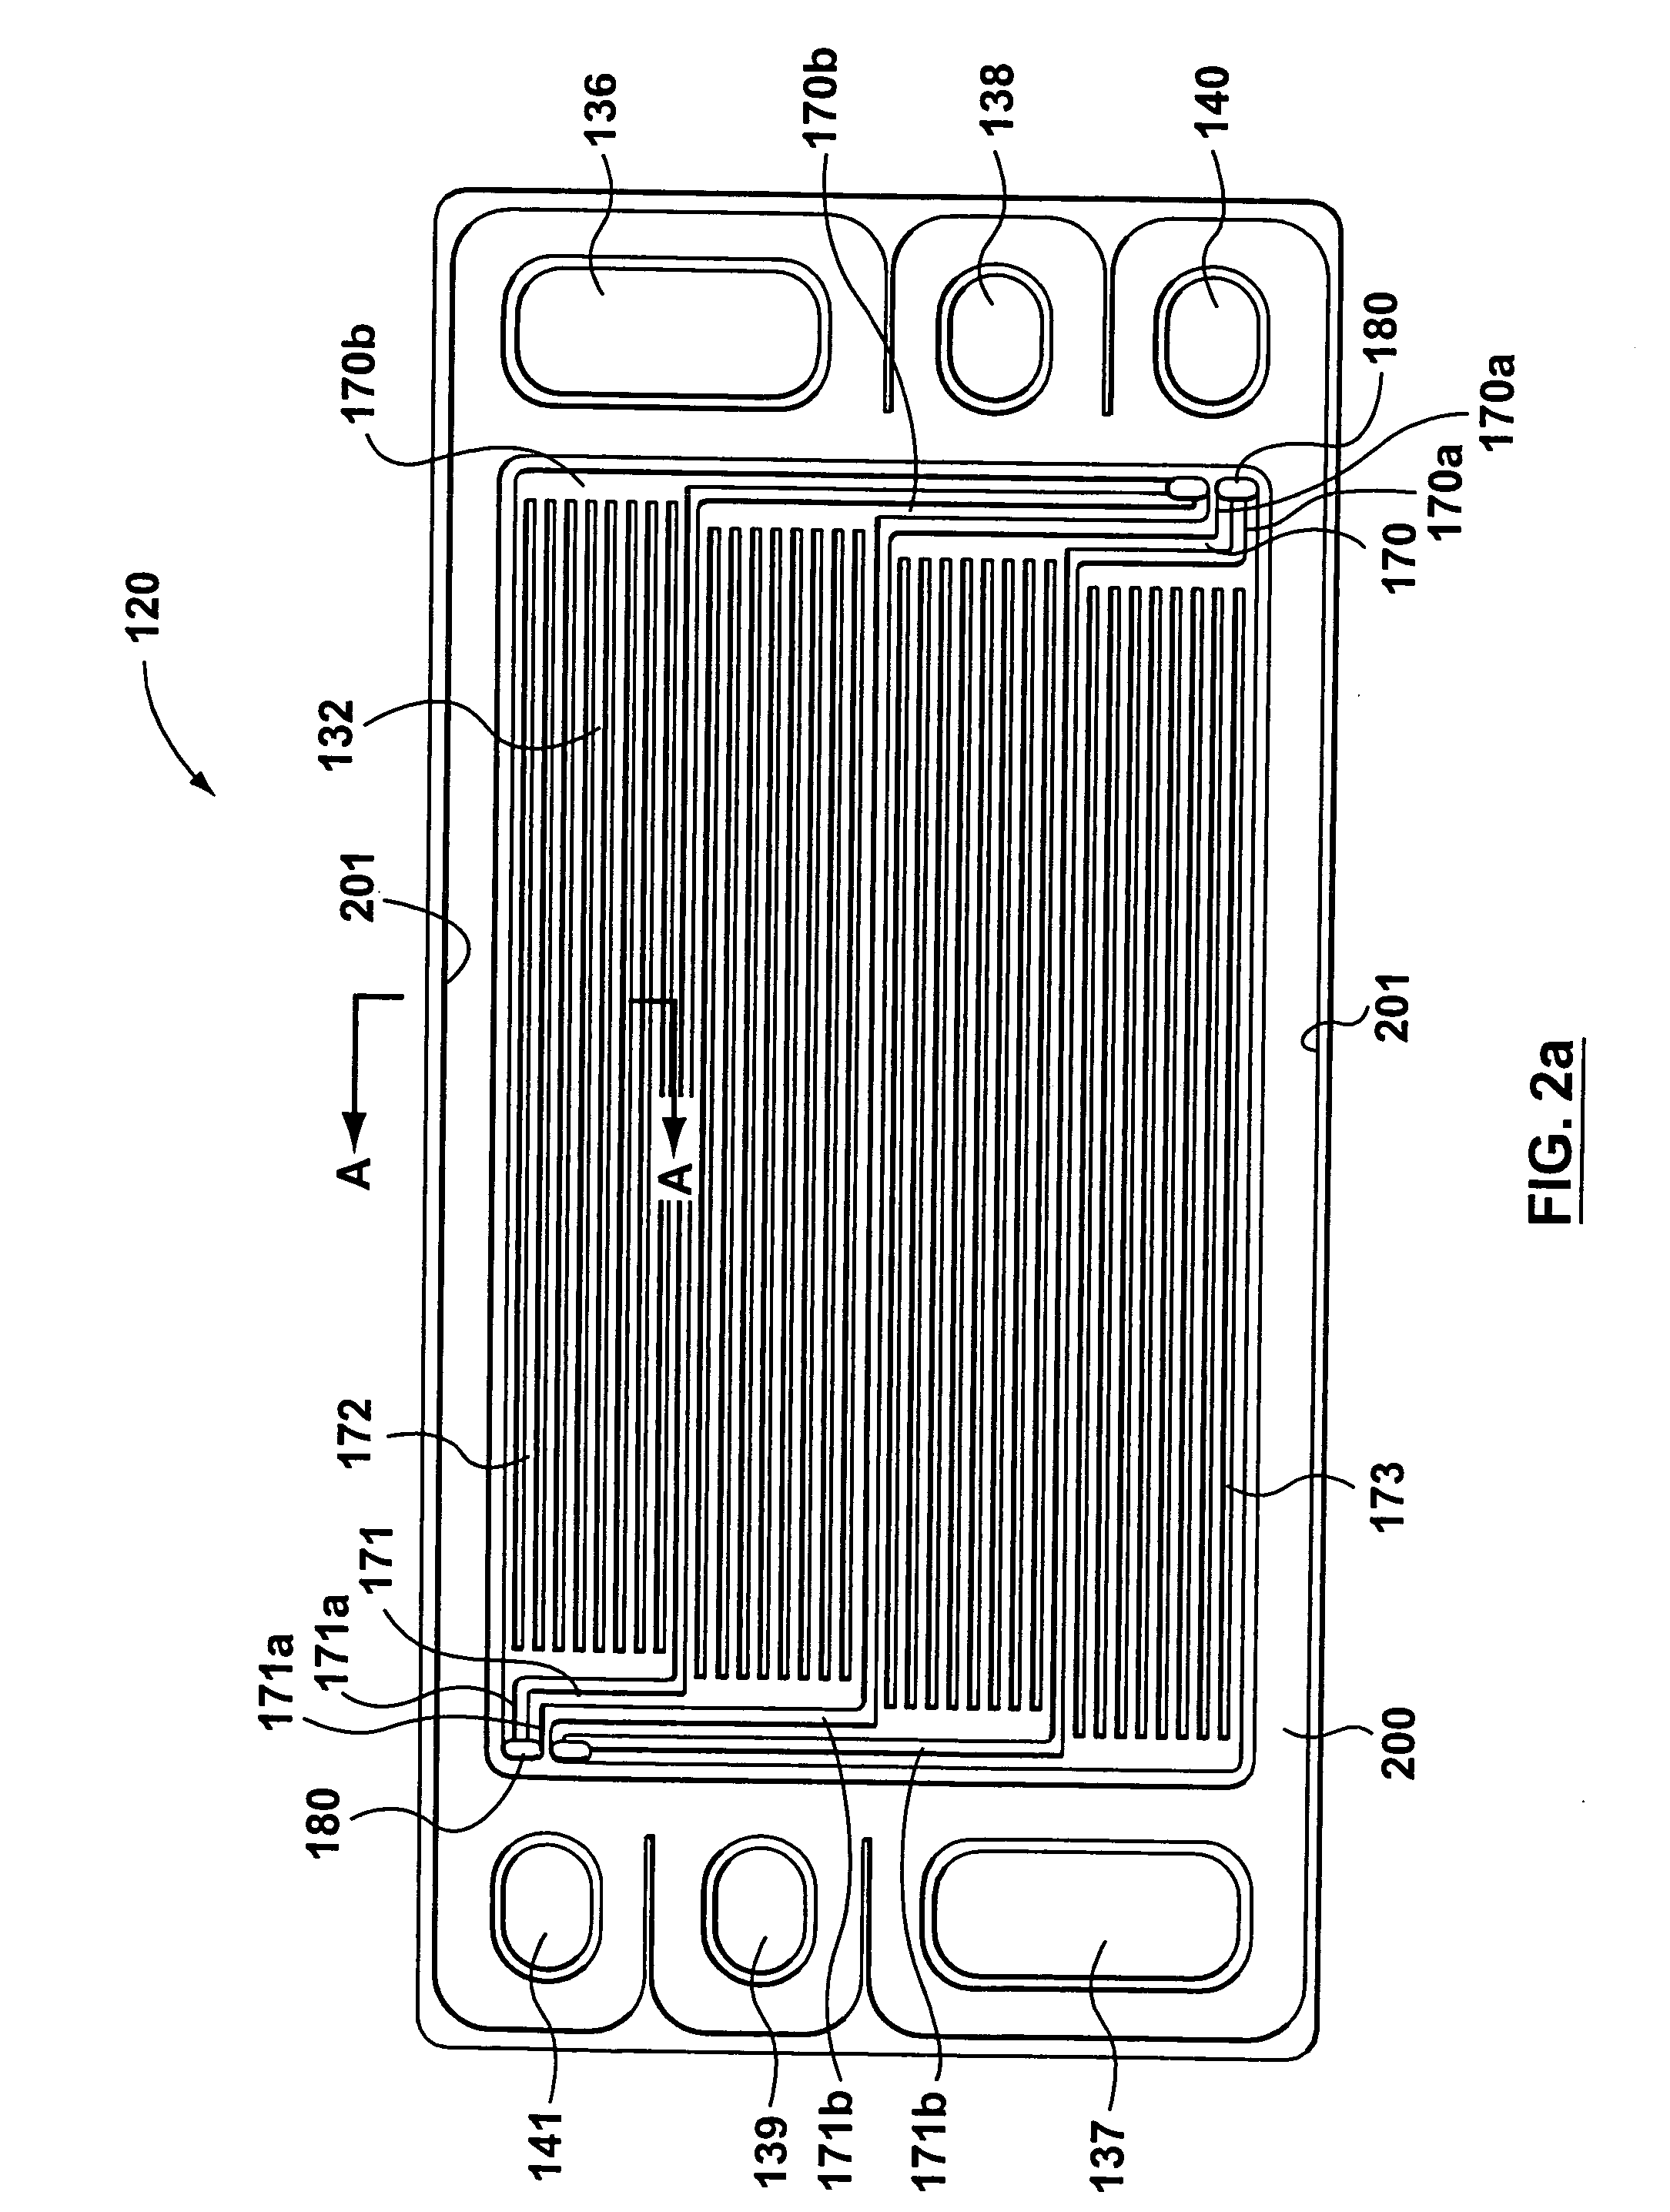 Fuel cell flow field plate